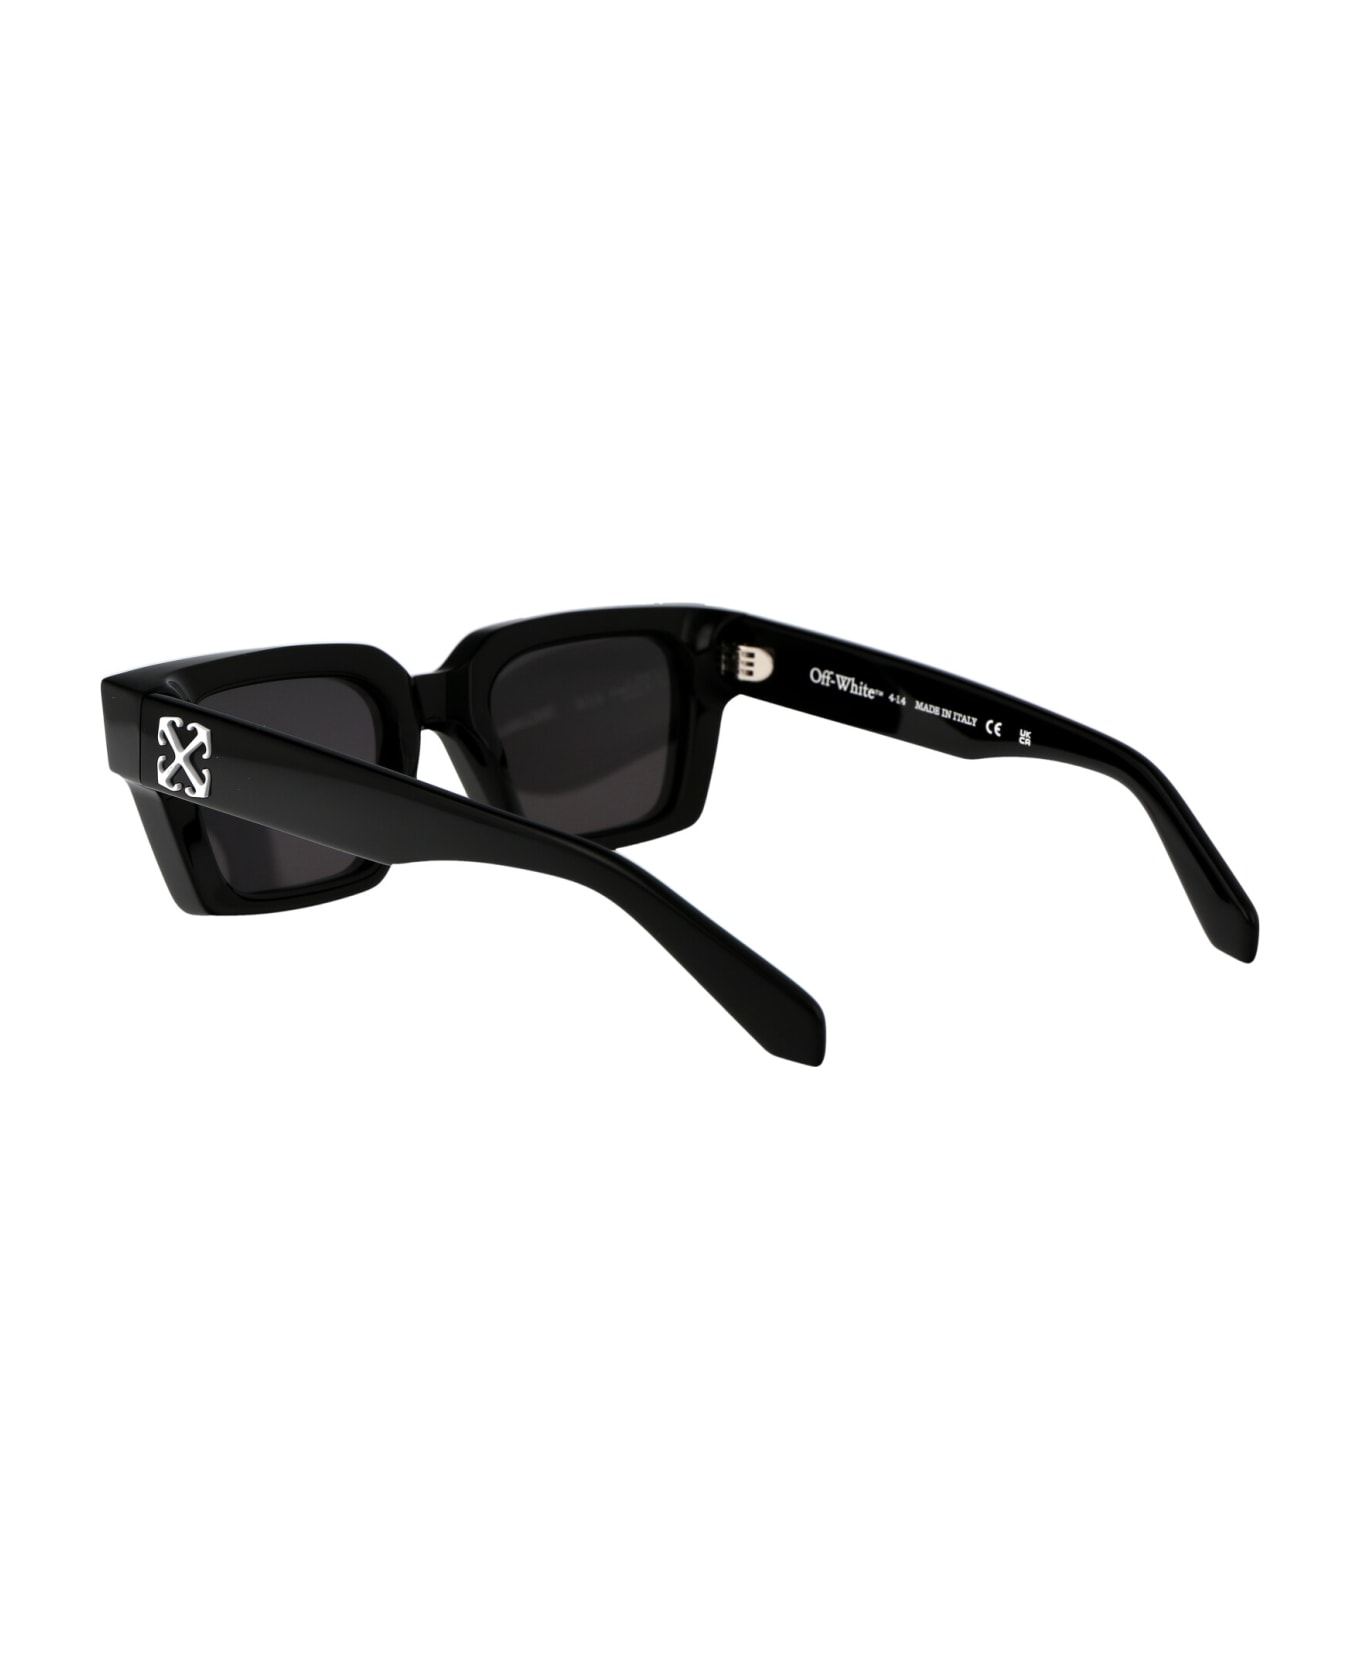 Off-White Virgil L Sunglasses - 1007 BLACK